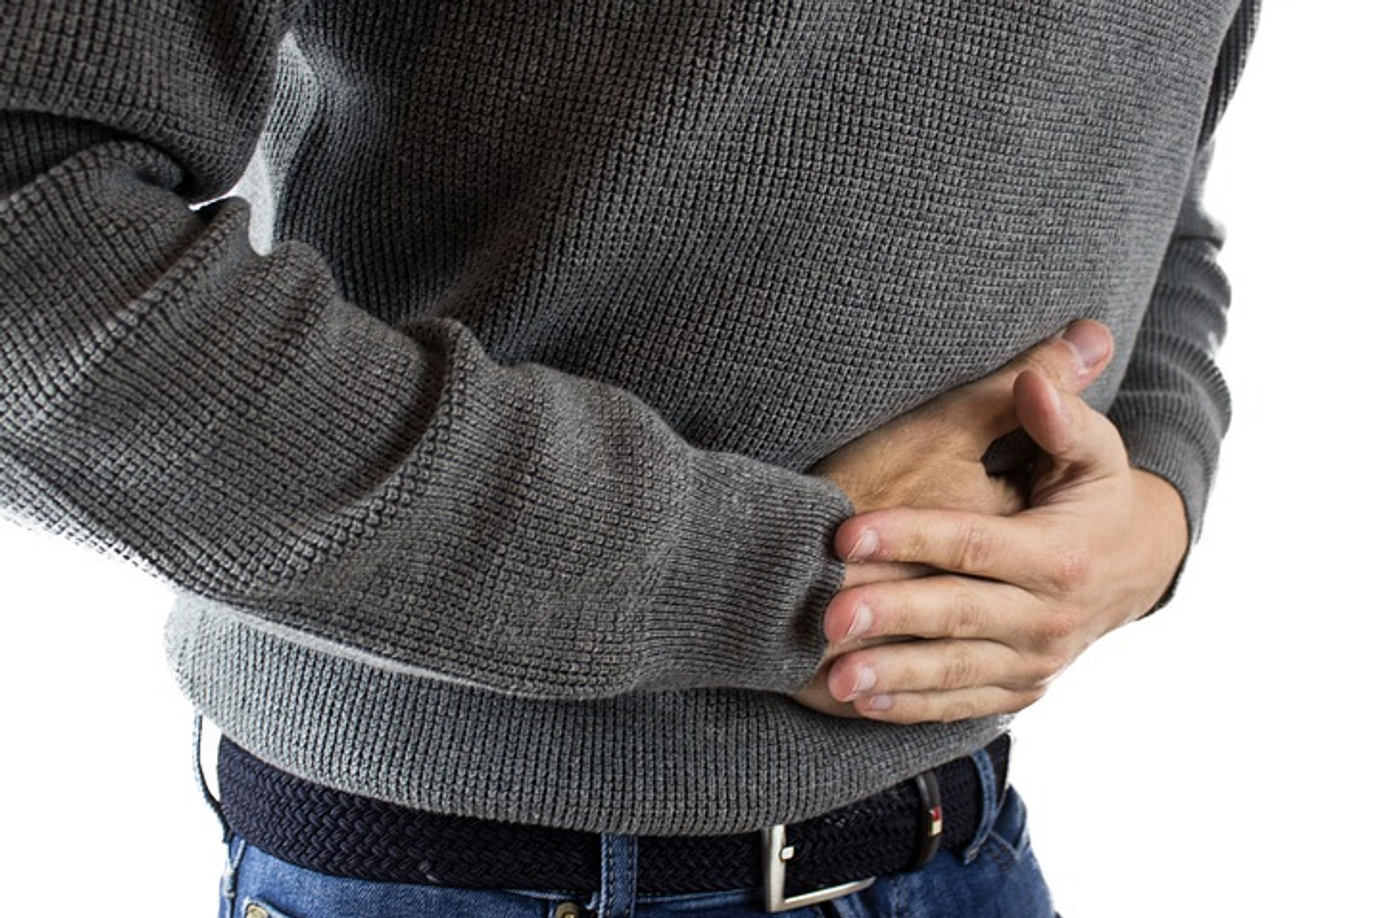 People with Crohn's disease might want to skip the Splenda. / Image credit: Pixabay